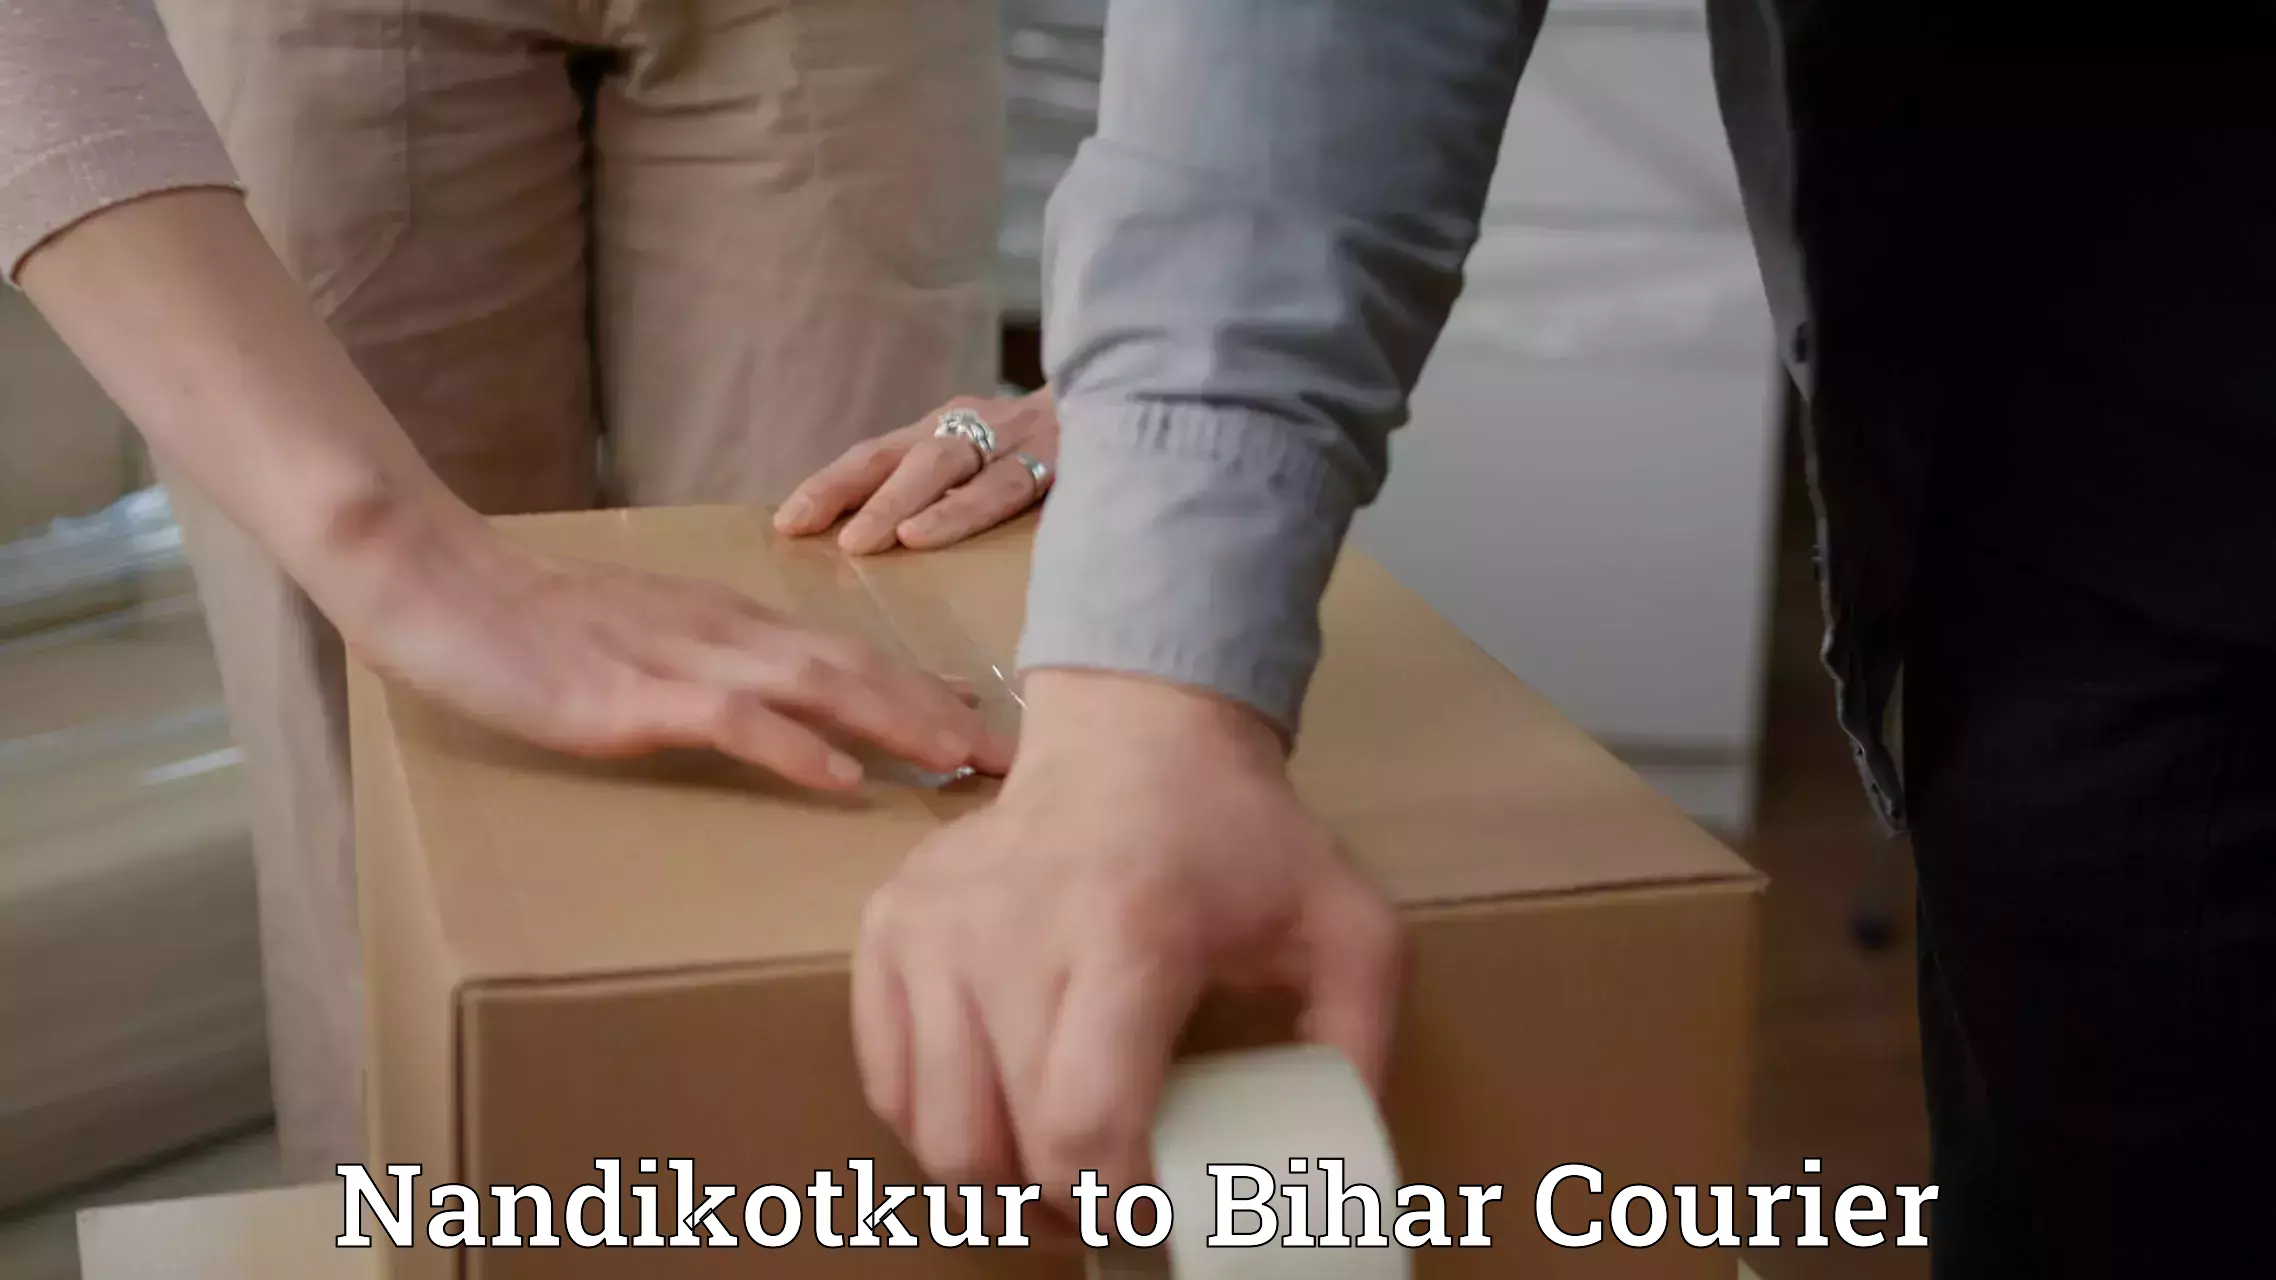 Easy return solutions Nandikotkur to Bihar